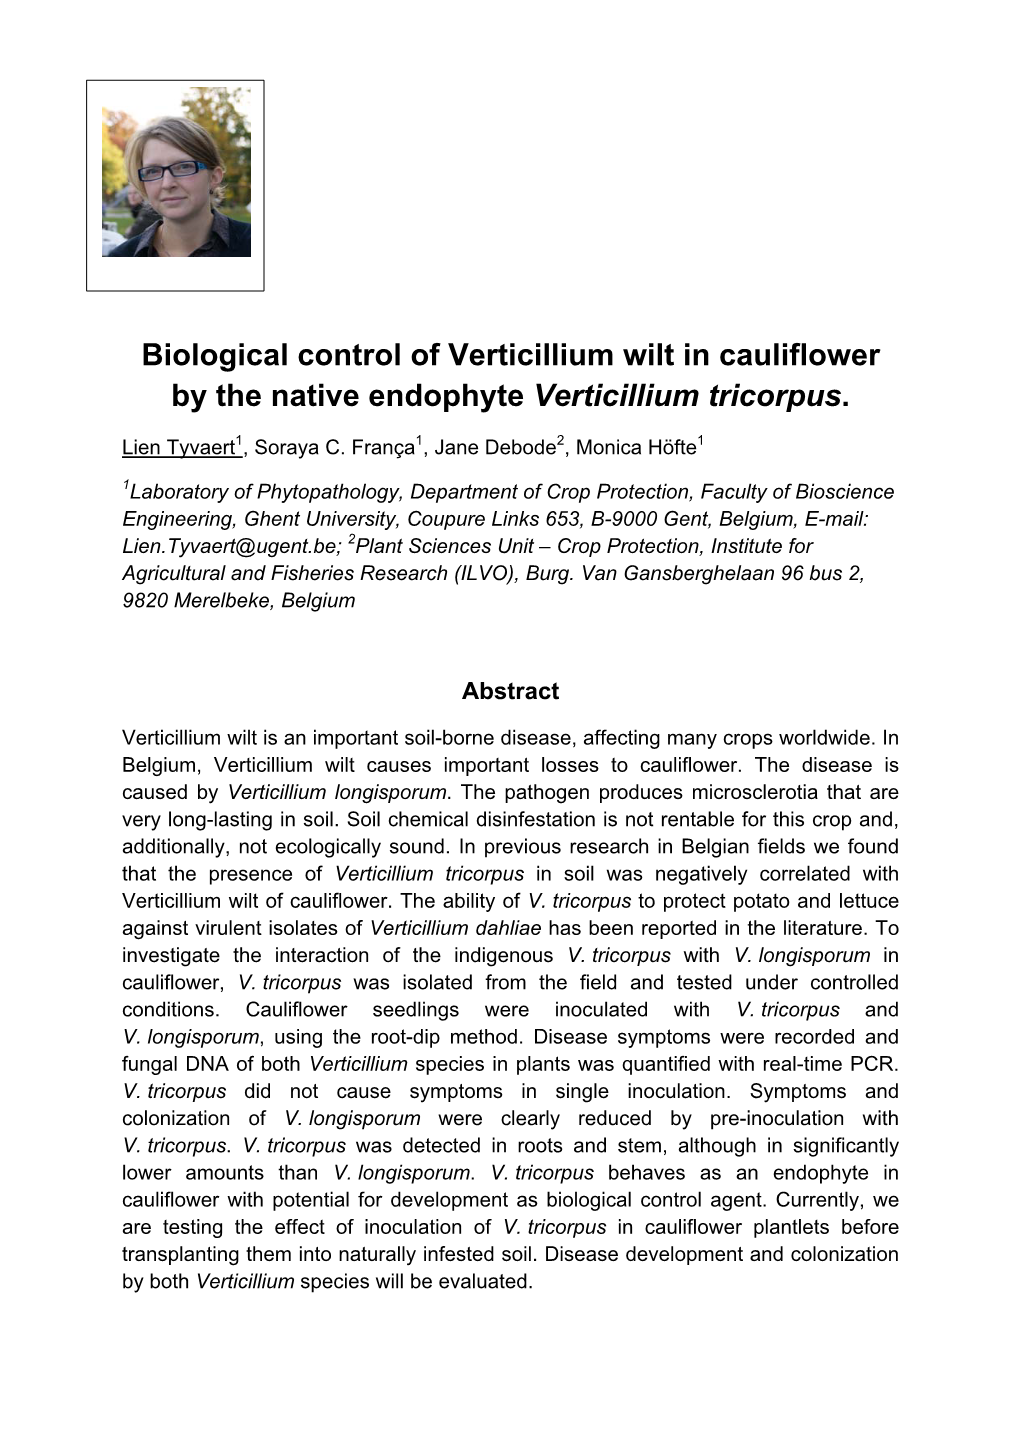 Biological Control of Verticillium Wilt in Cauliflower by the Native Endophyte Verticillium Tricorpus